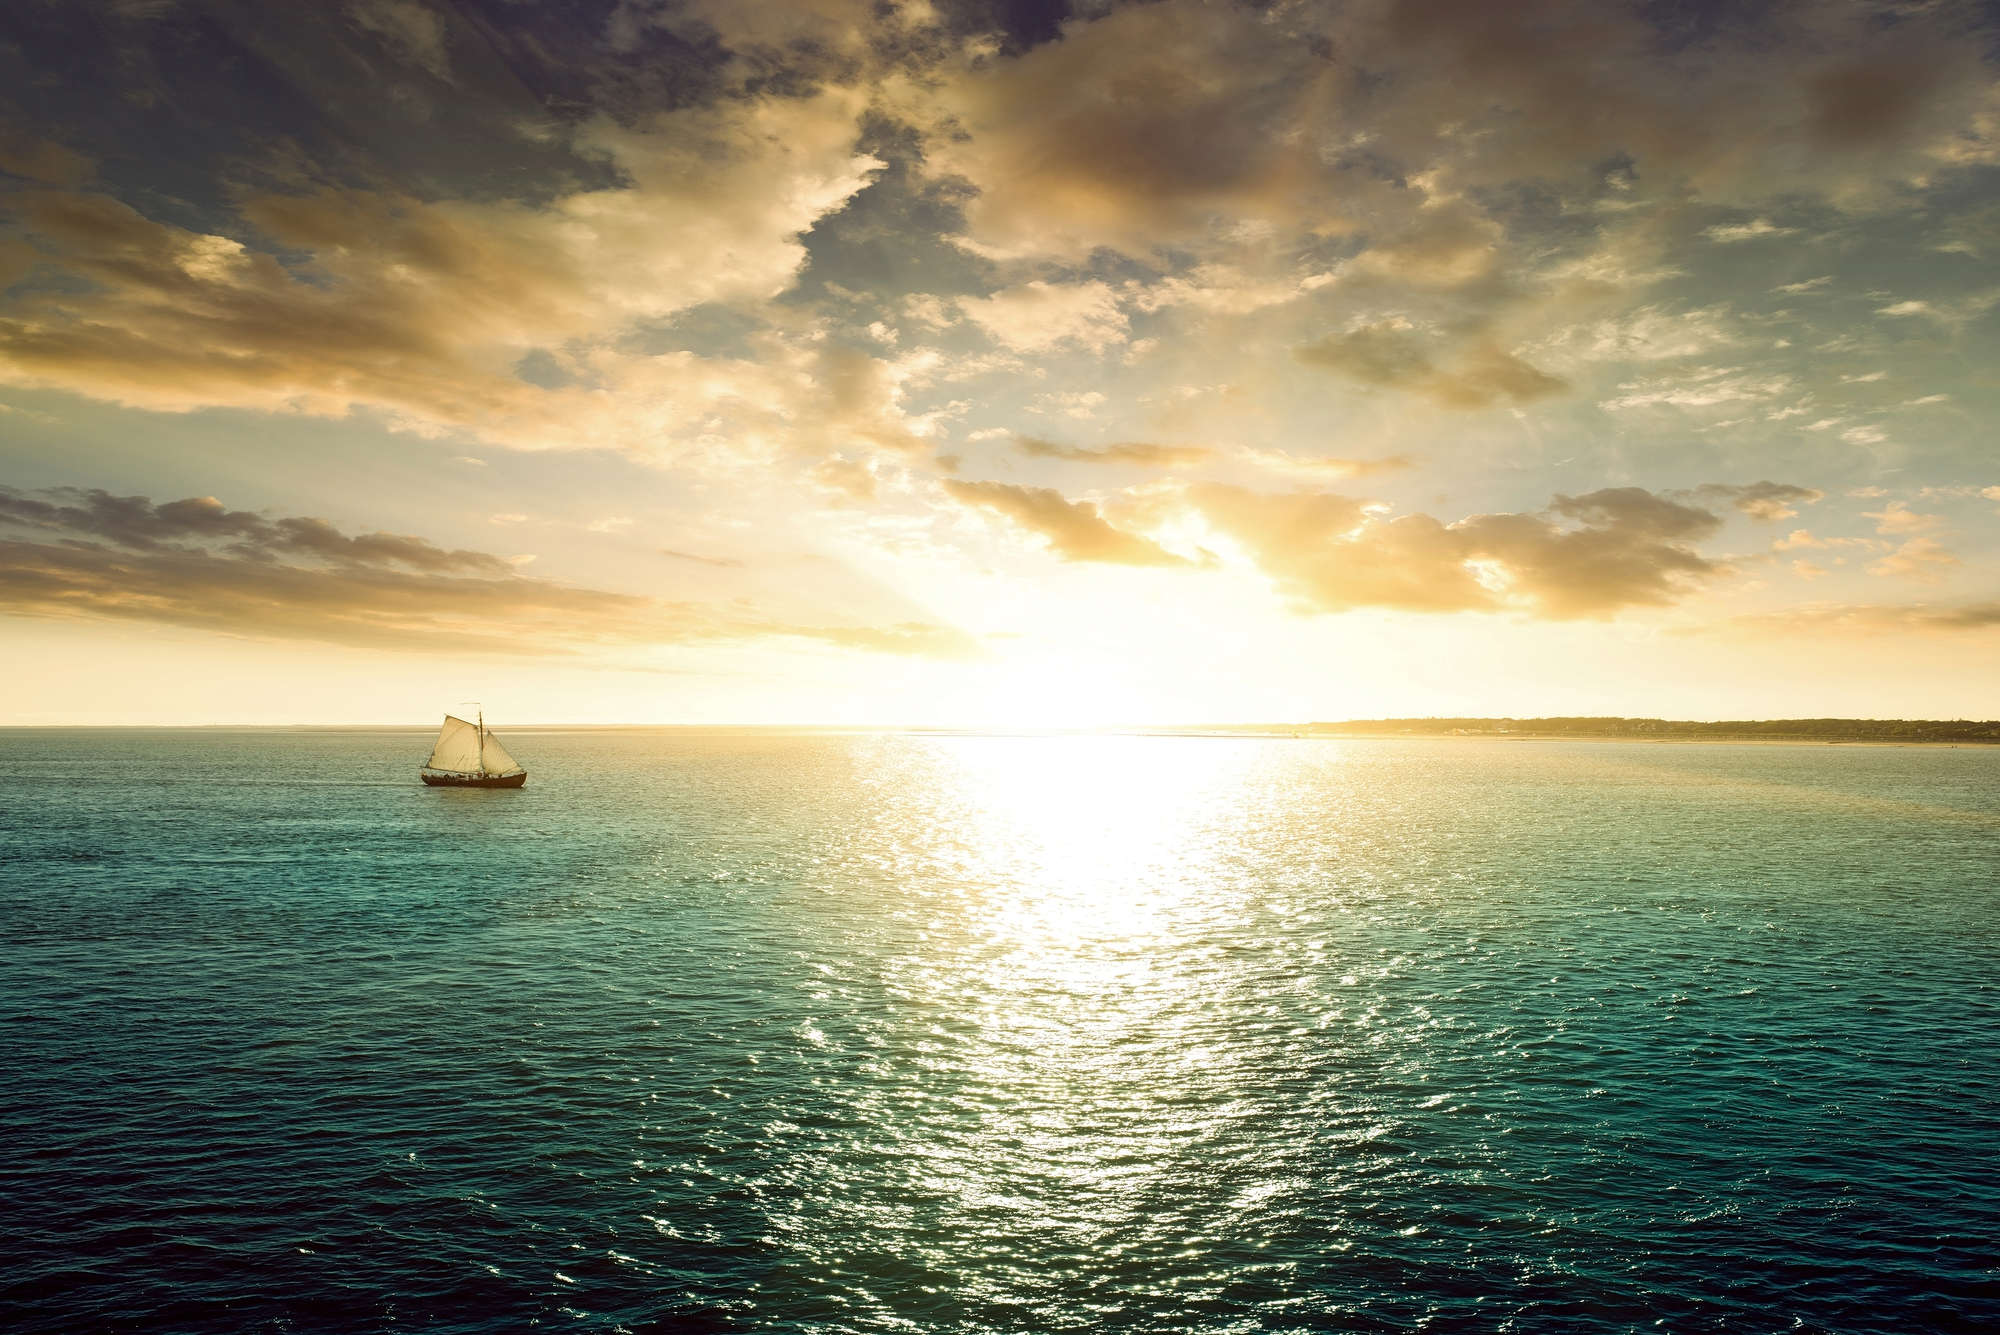             Carta da parati mare Barca a vela al tramonto su tessuto non tessuto liscio opaco
        